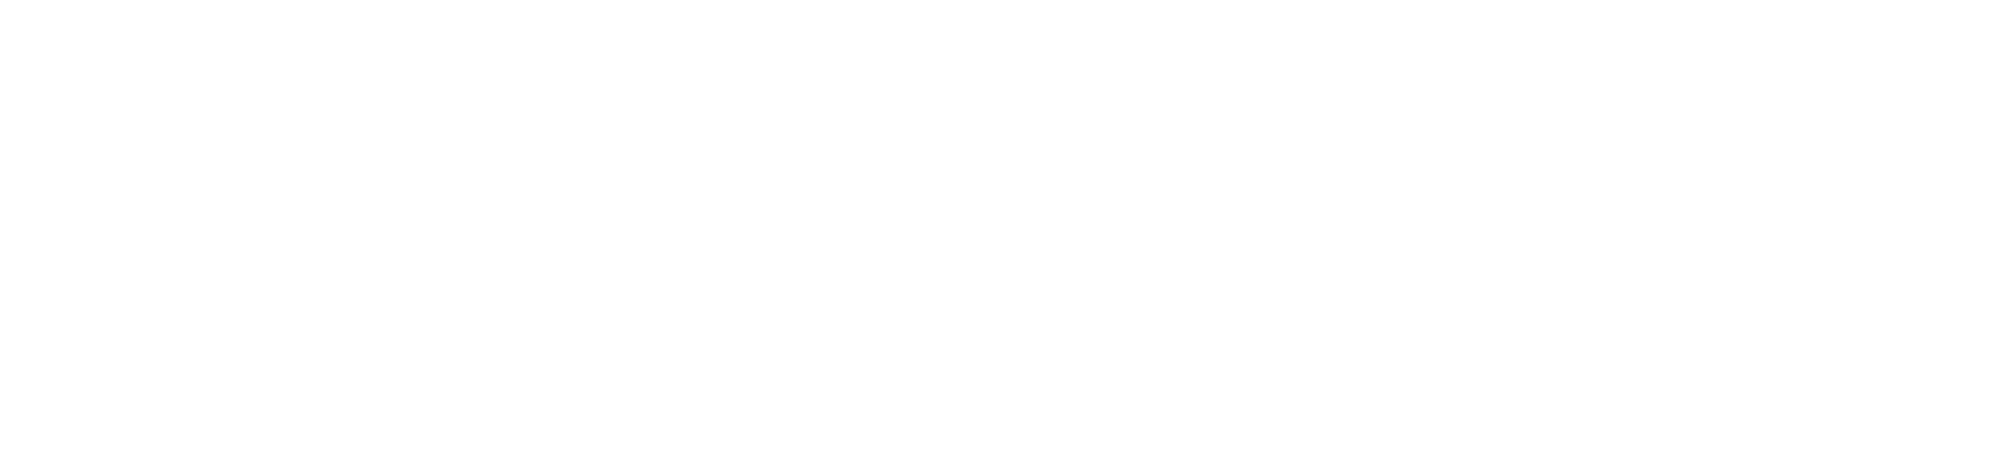 Musikkpedagogikk.no - logo